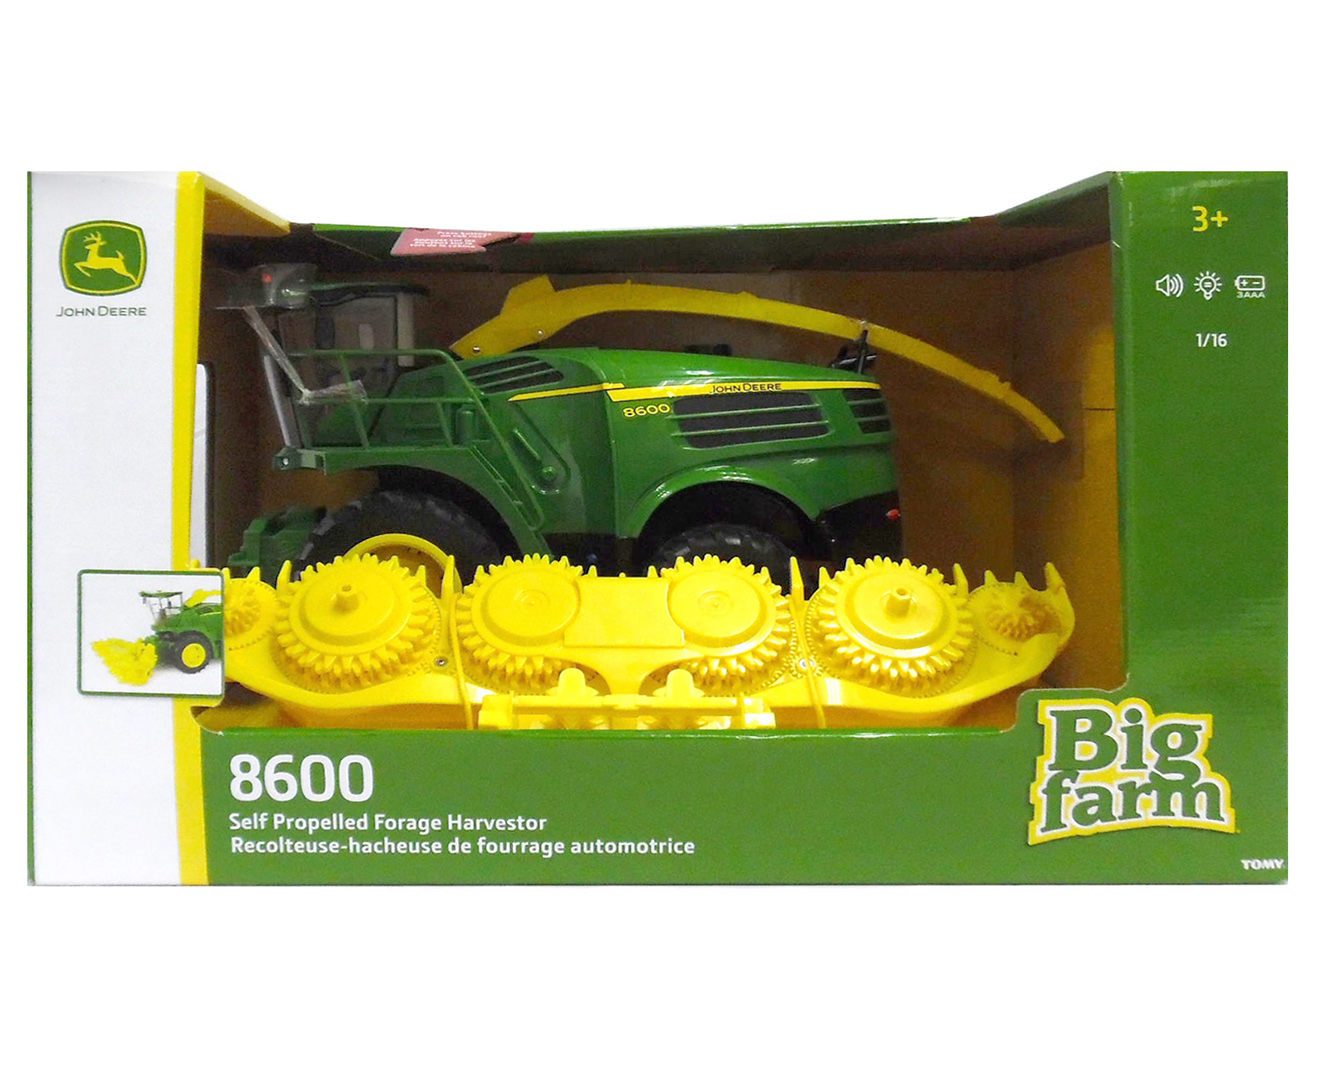 John Deere 116 Ertl Big Farm Self Propelled Forage Harvester Toy Nz 7069